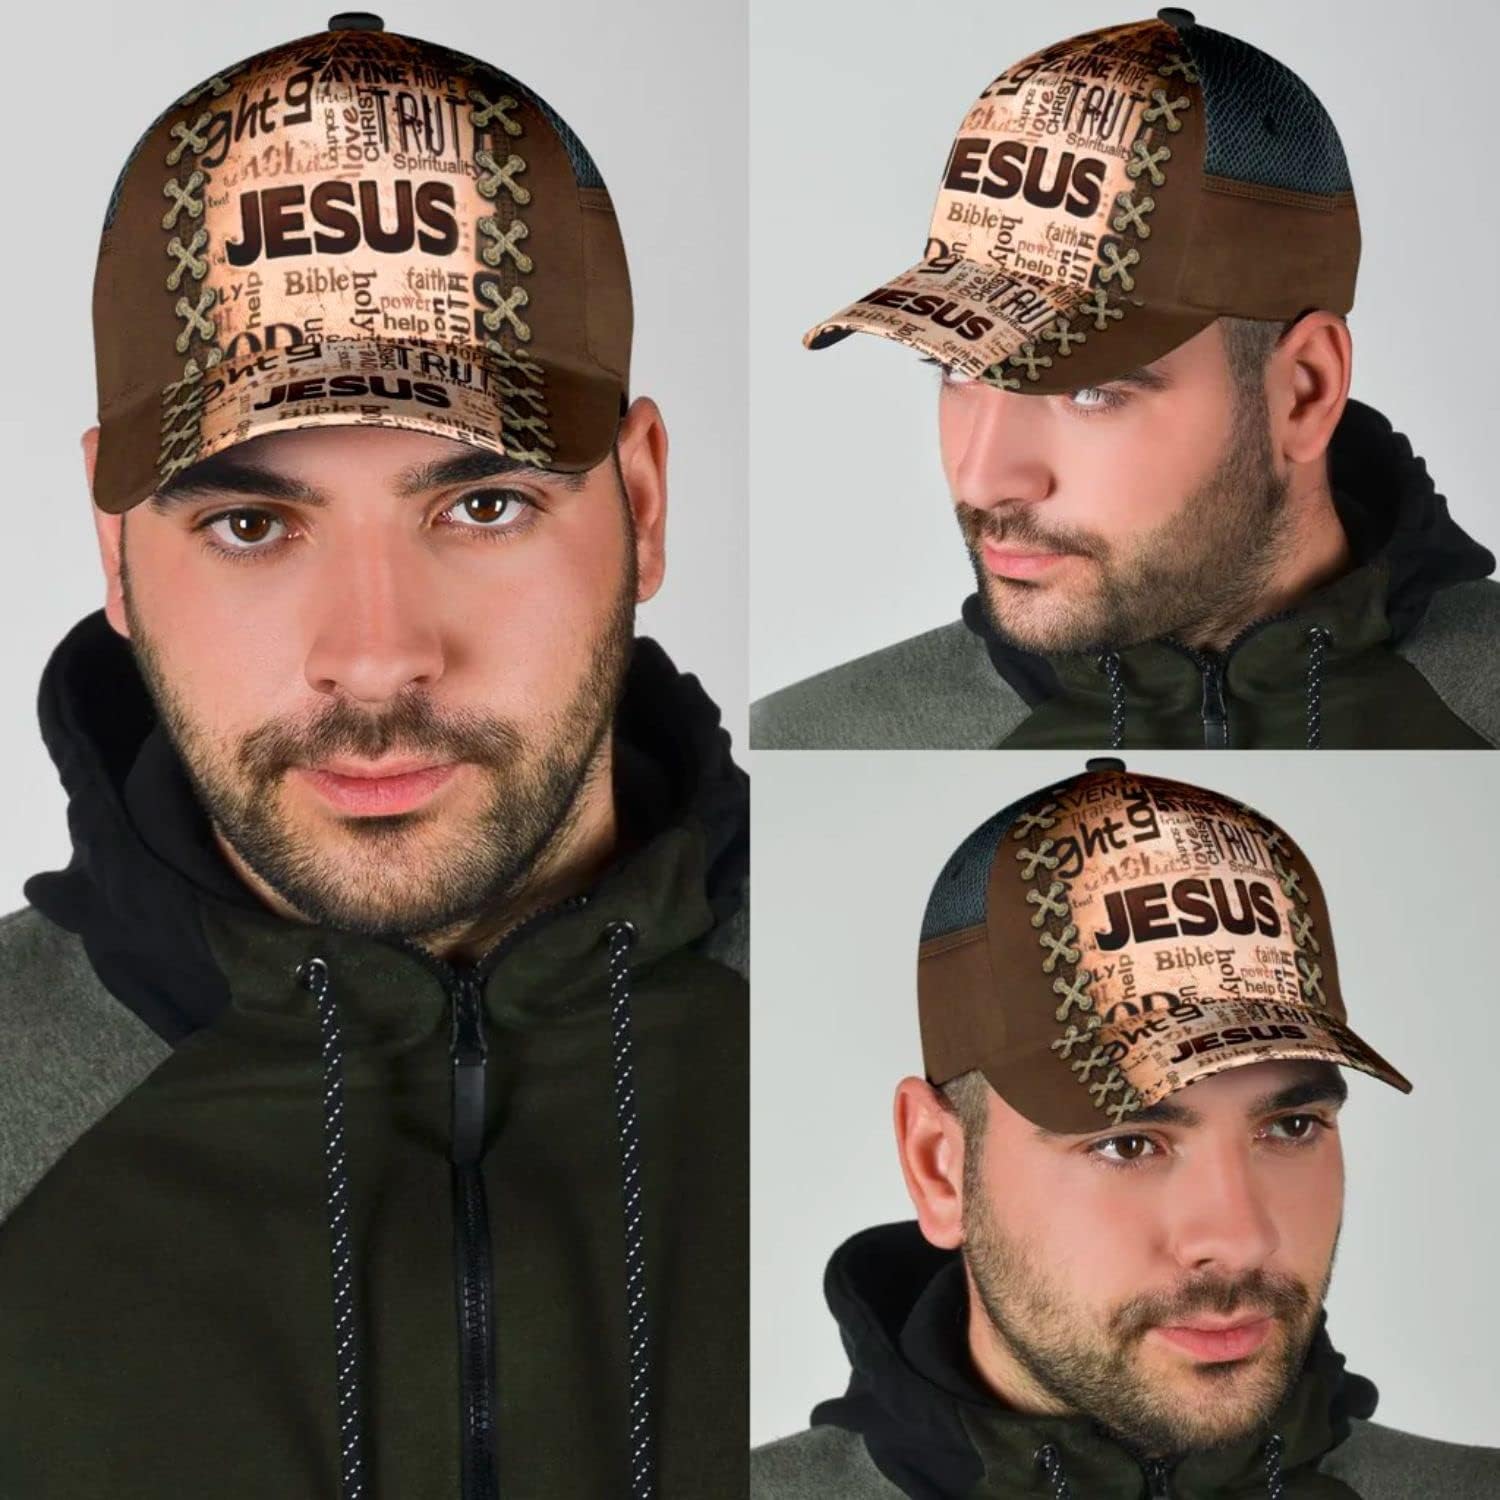 Jesus Bible Verse Holy Baseball Cap - Christian Hats for Men and Women